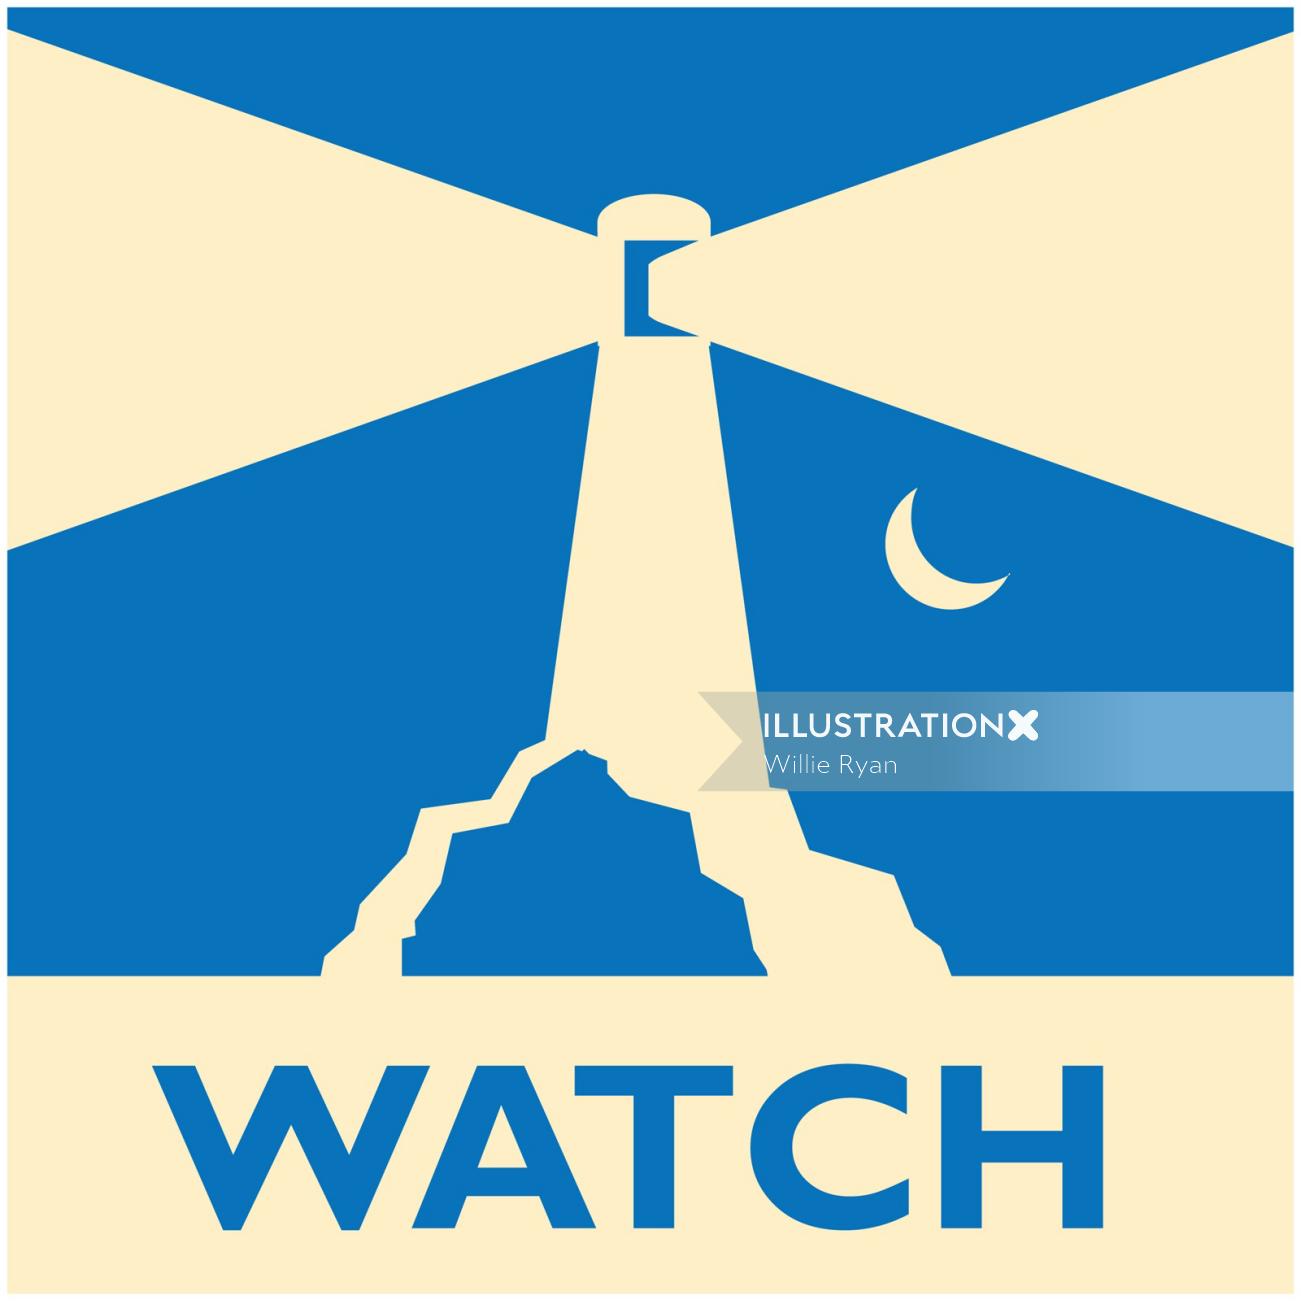 lighthouse symbol illustration by Willie Ryan